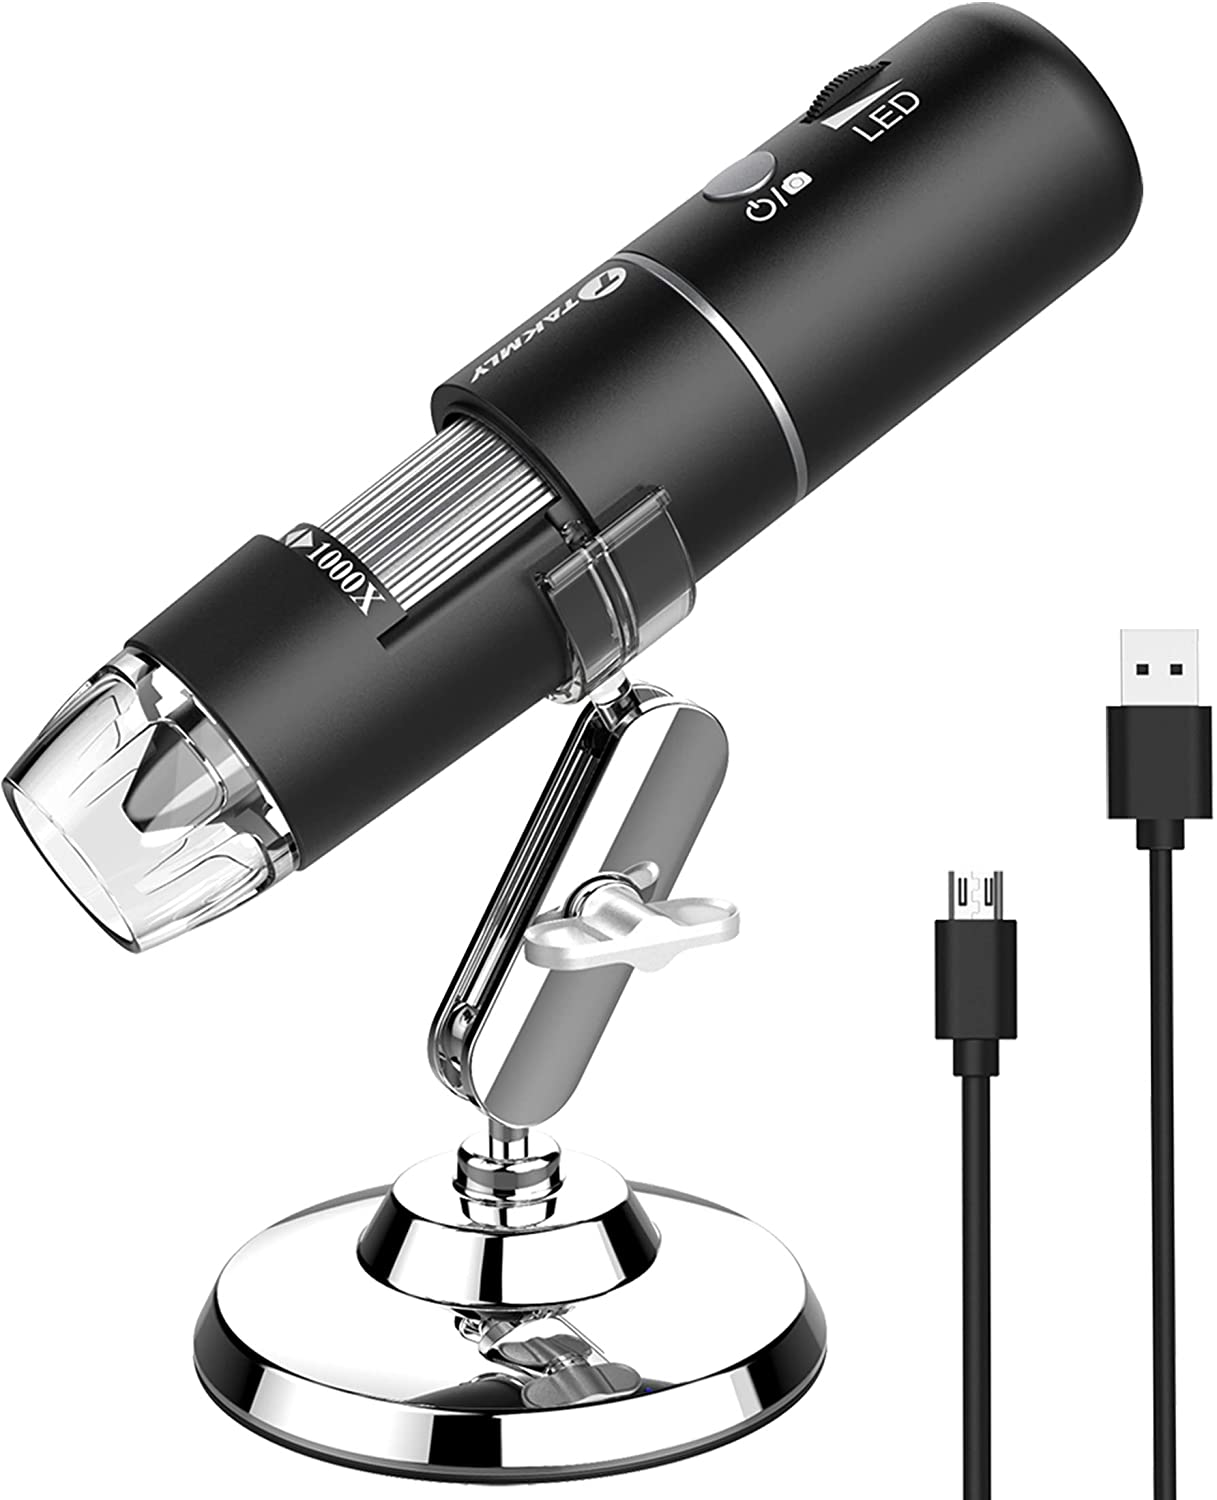 Digital Microscope Cameras - Motic, OptixCam, Dino-Eye, Jenoptik